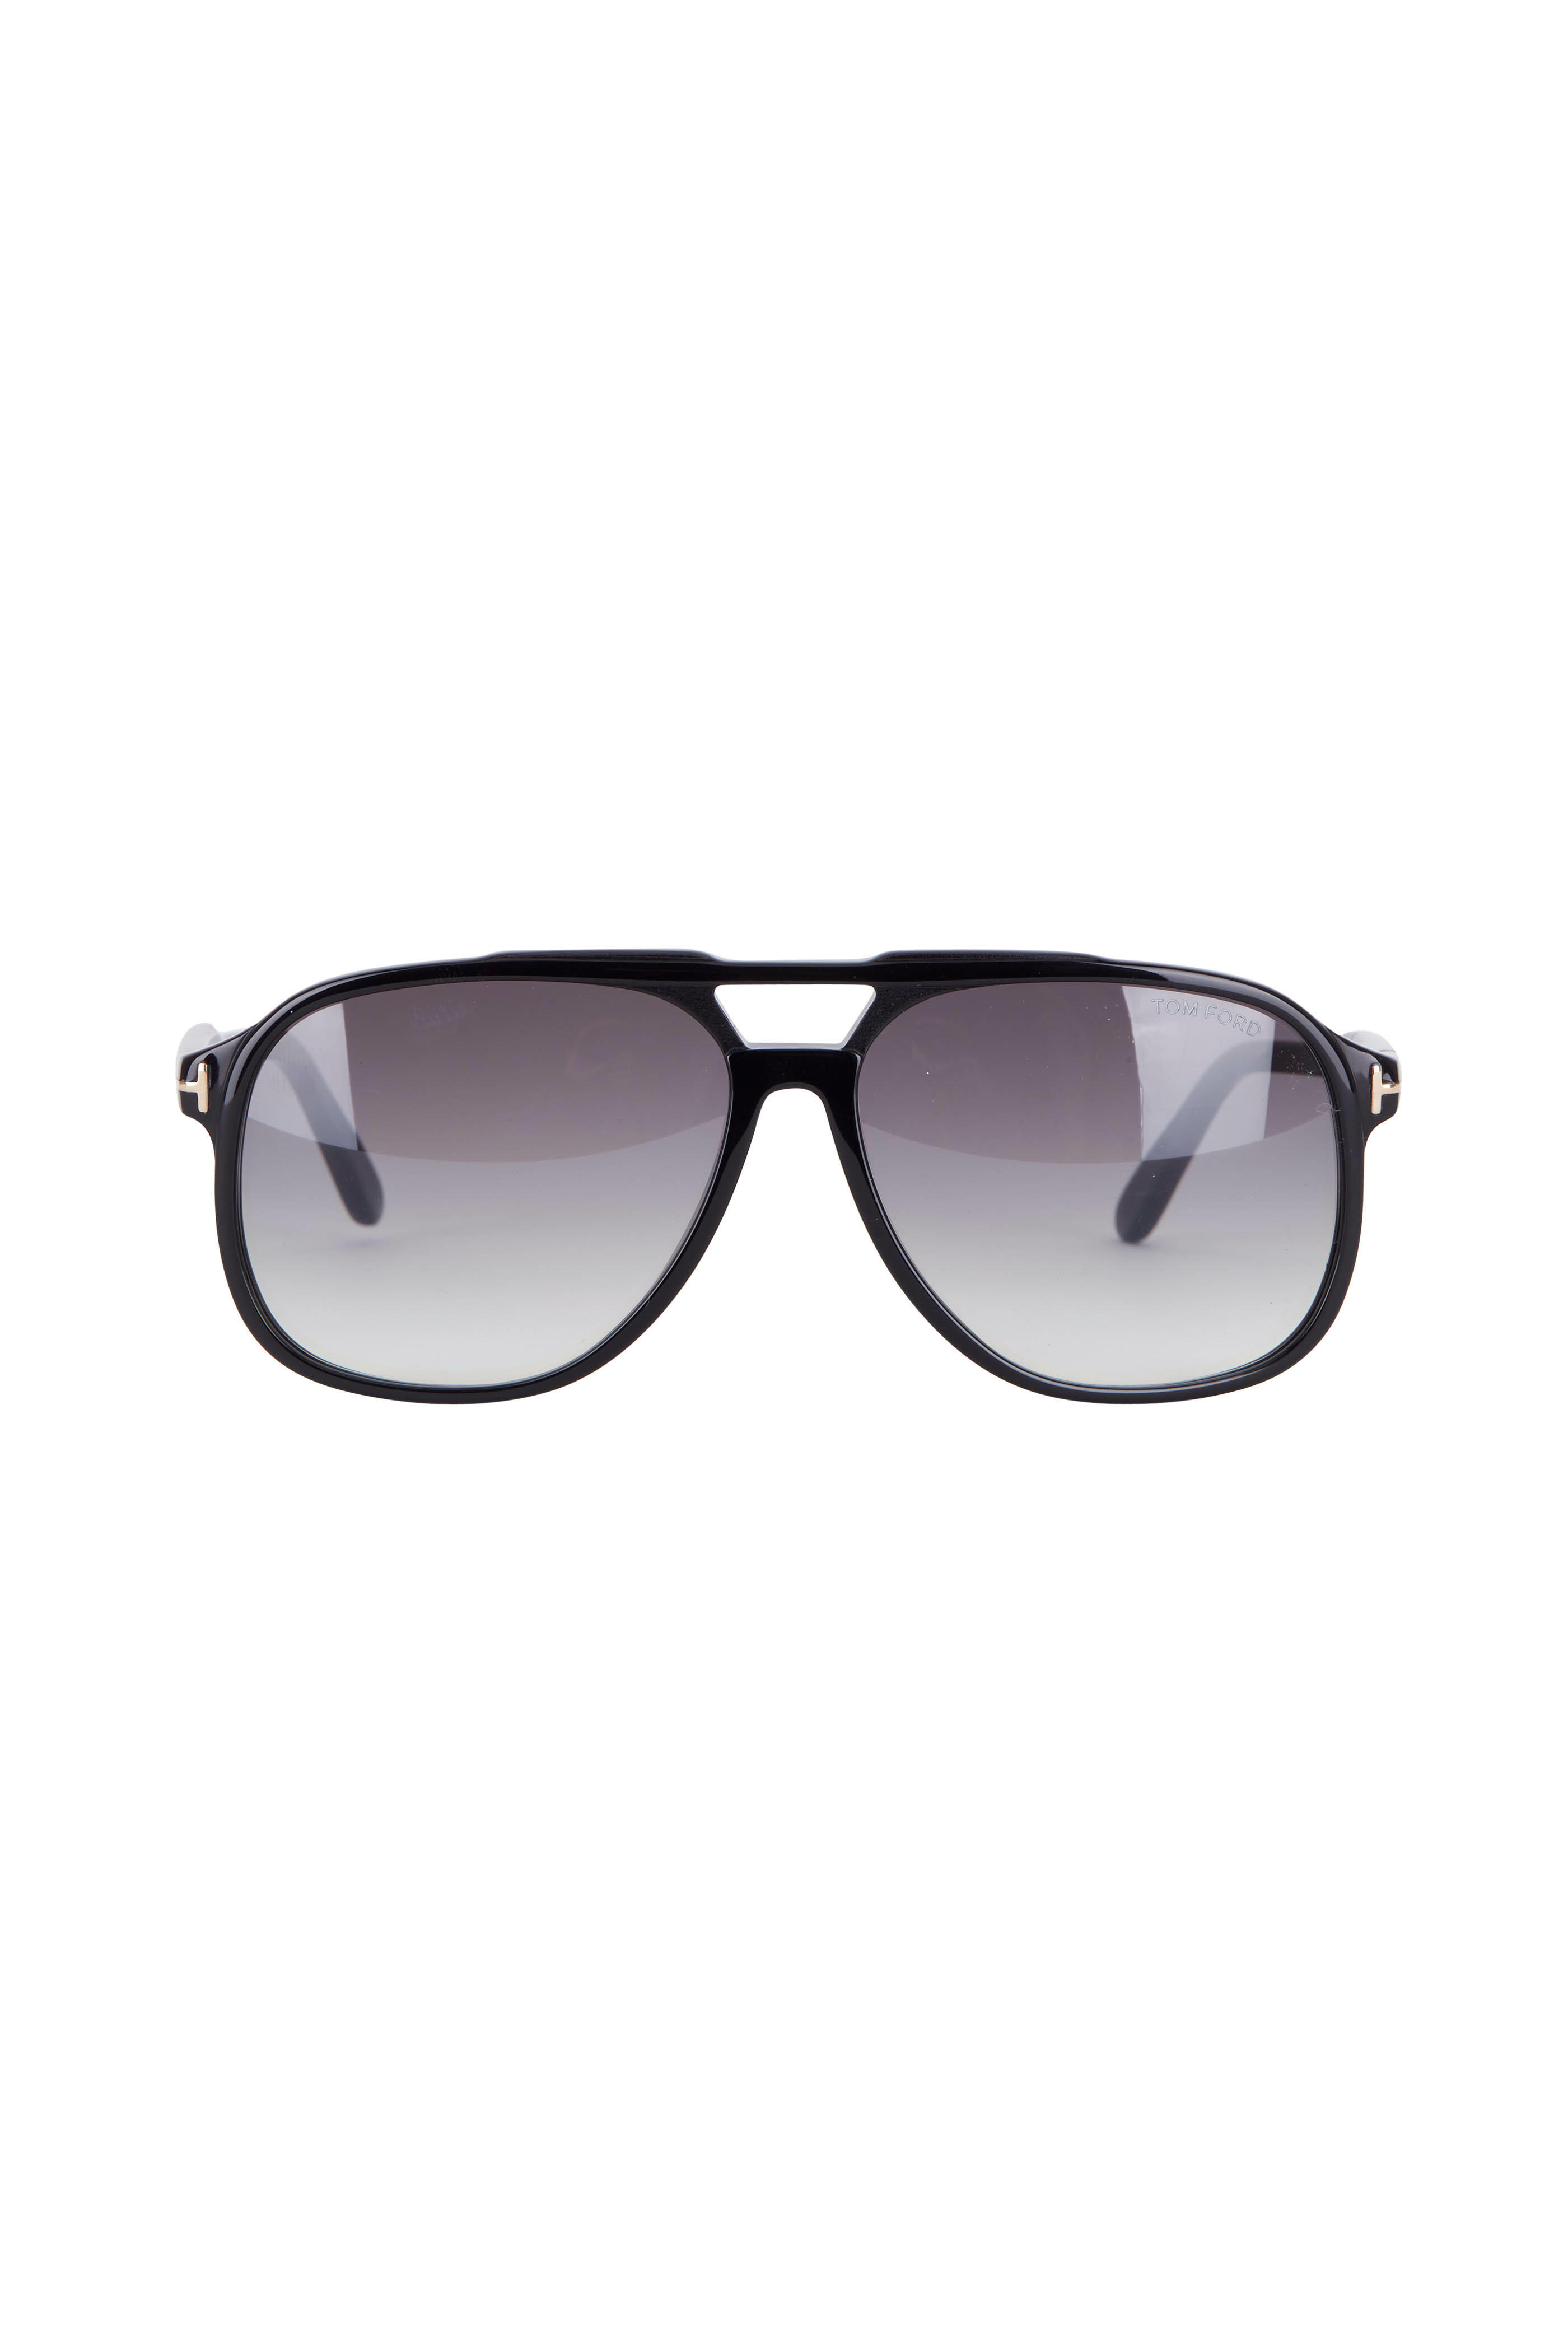 Tom Ford Eyewear - Black Aviator Sunglasses | Mitchell Stores